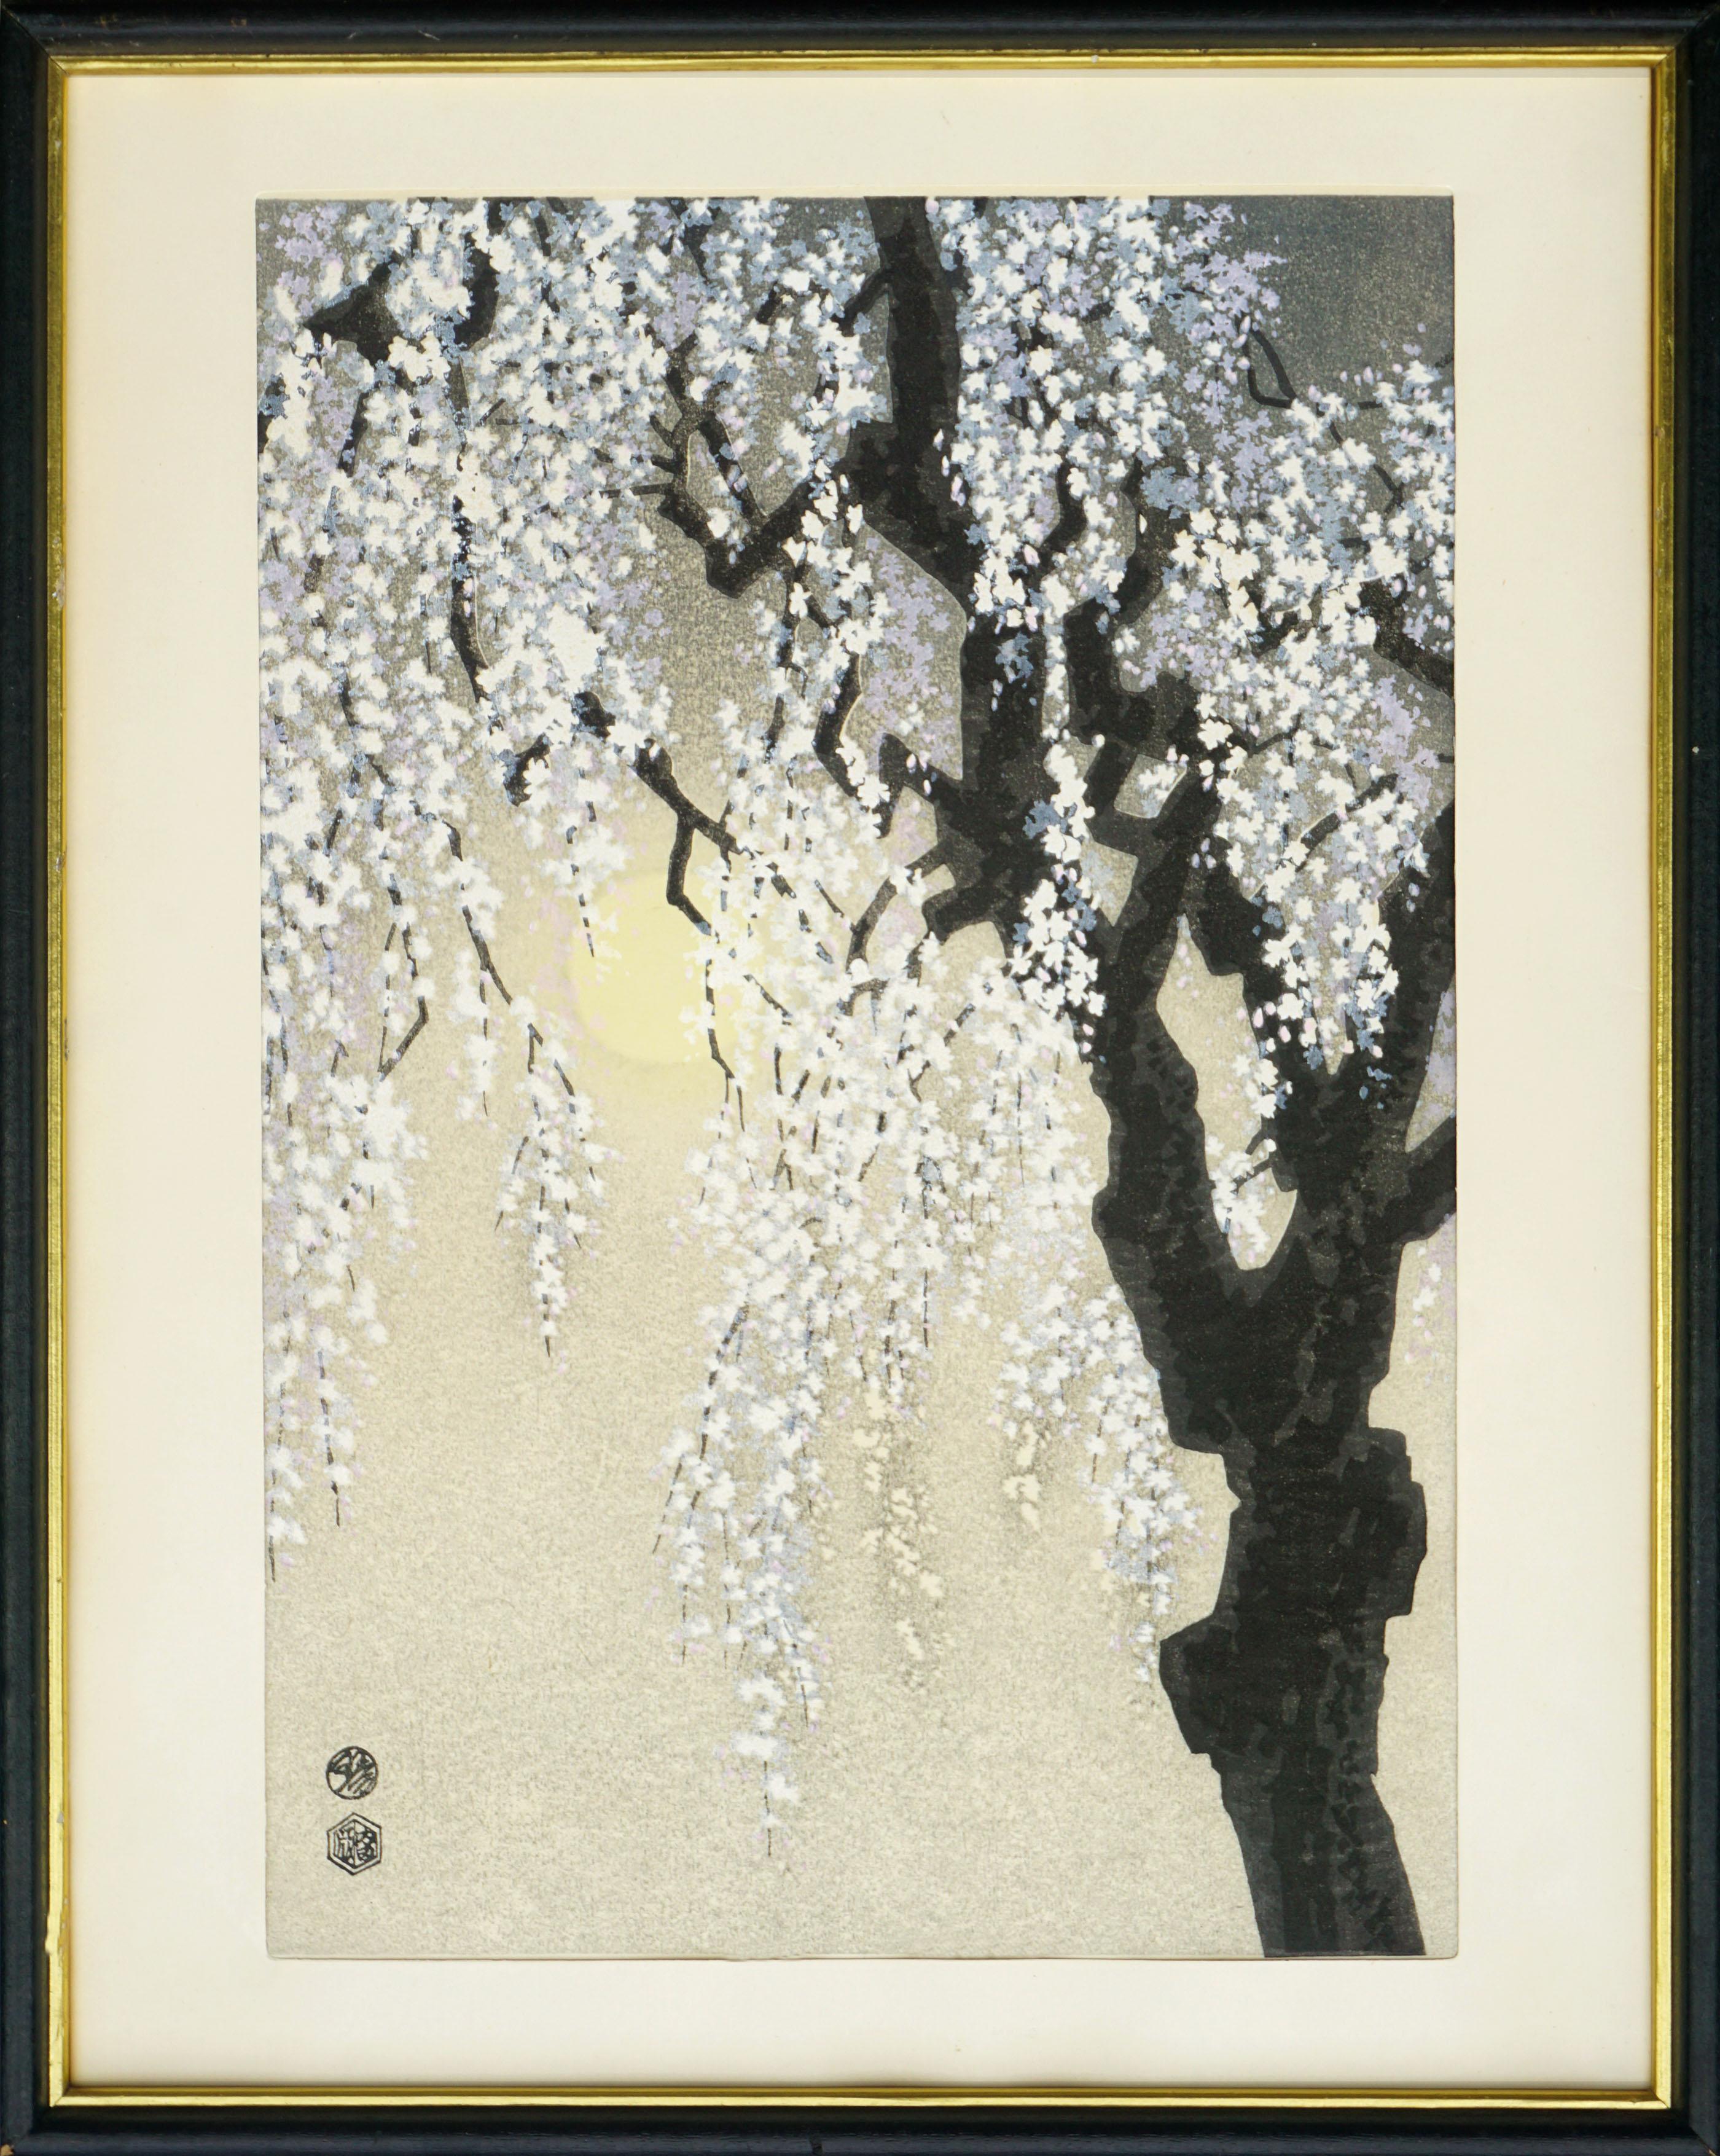 Kotozuka Eiichi Landscape Painting - Asian Nocturnal Cherry Blossoms